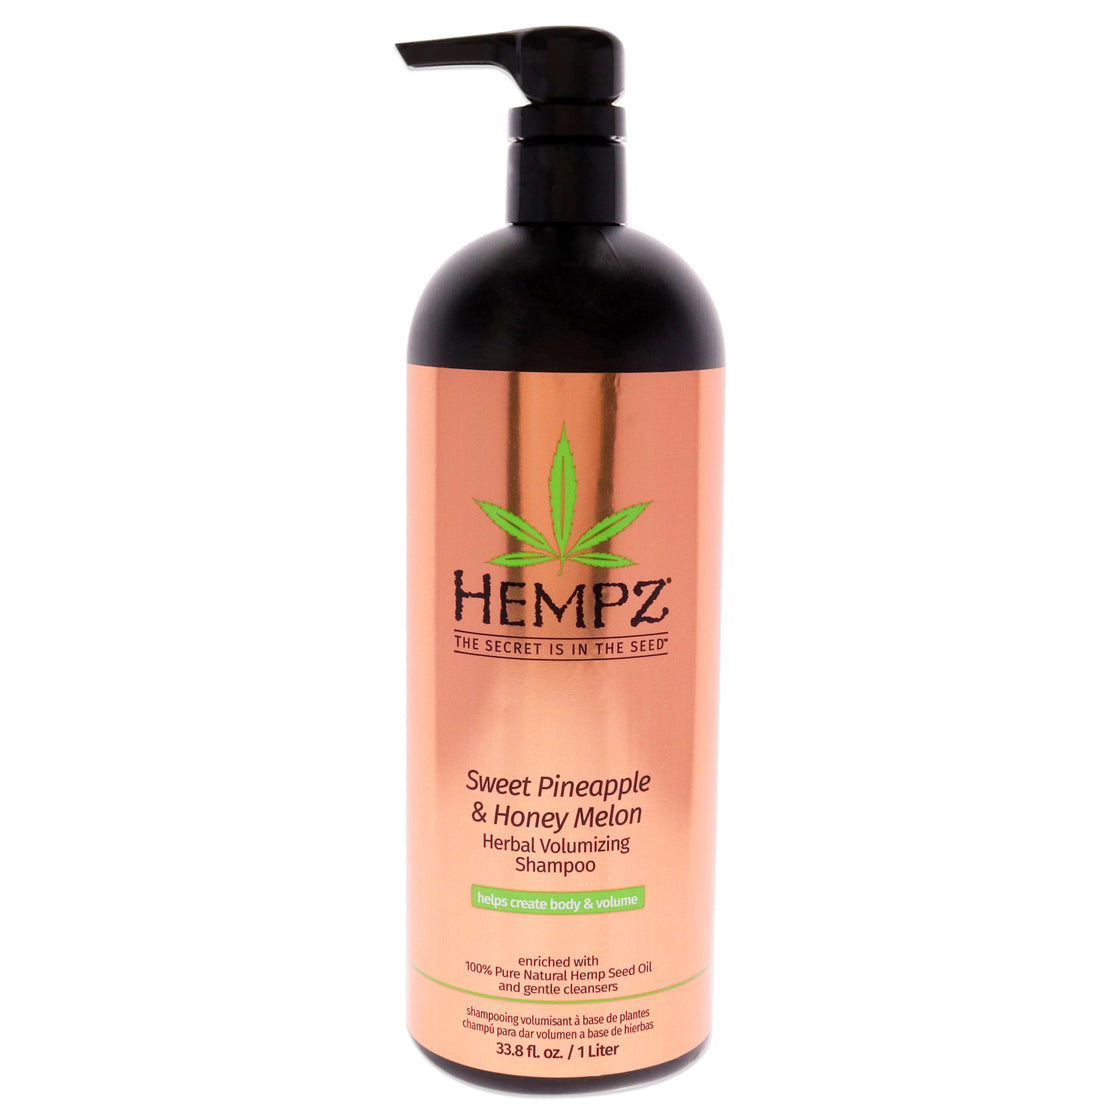 Sweet Pineapple and Honey Melon Herbal Volumizing Shampoo by Hempz for Unisex - 33.8 oz Shampoo